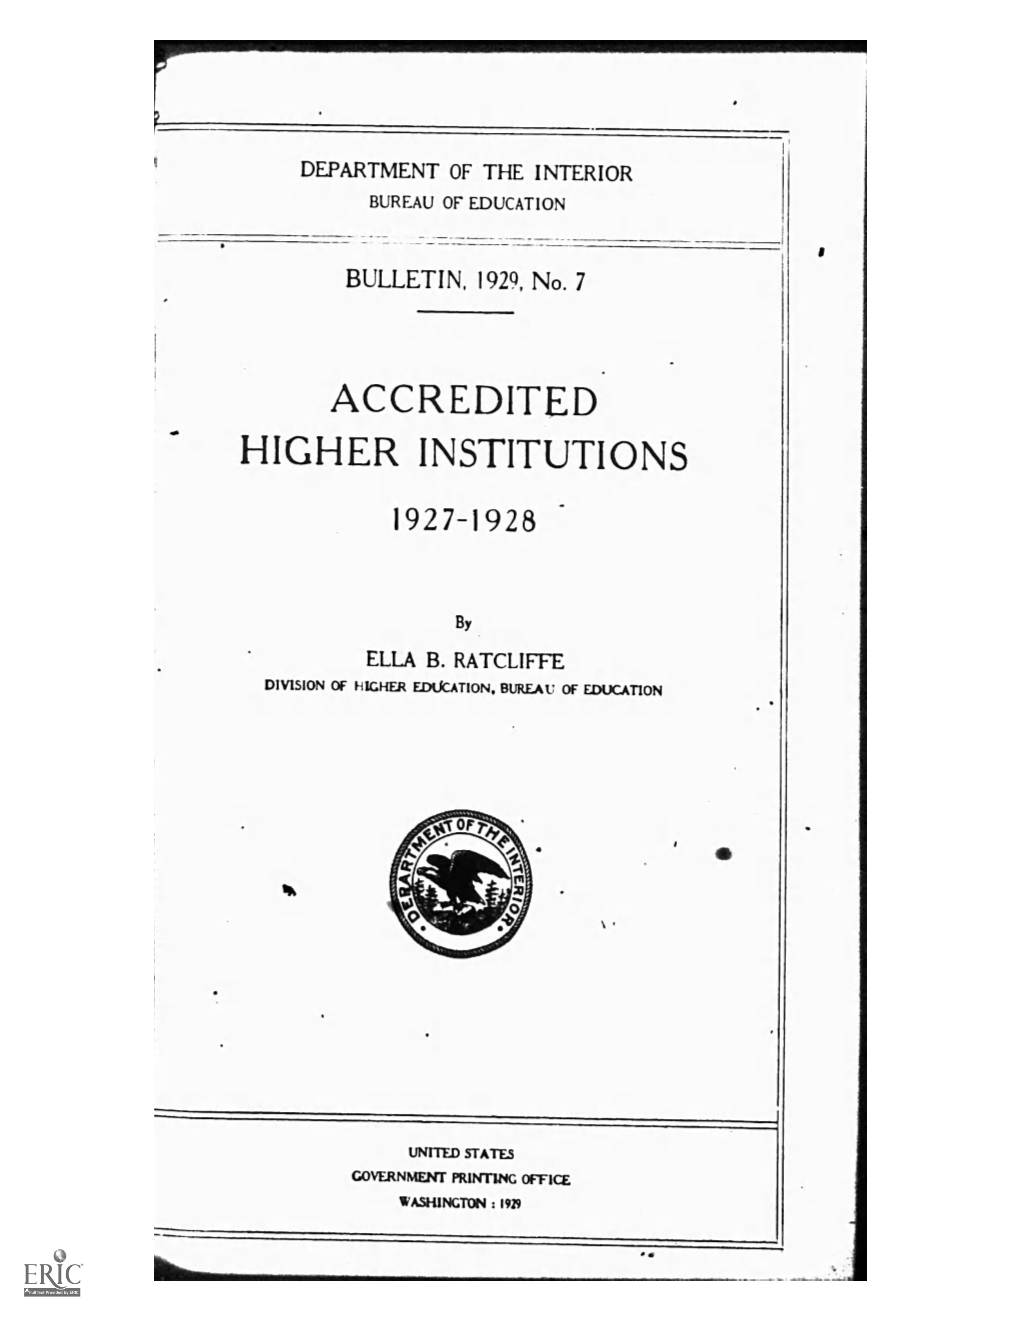 Accredited Higherinstitutions